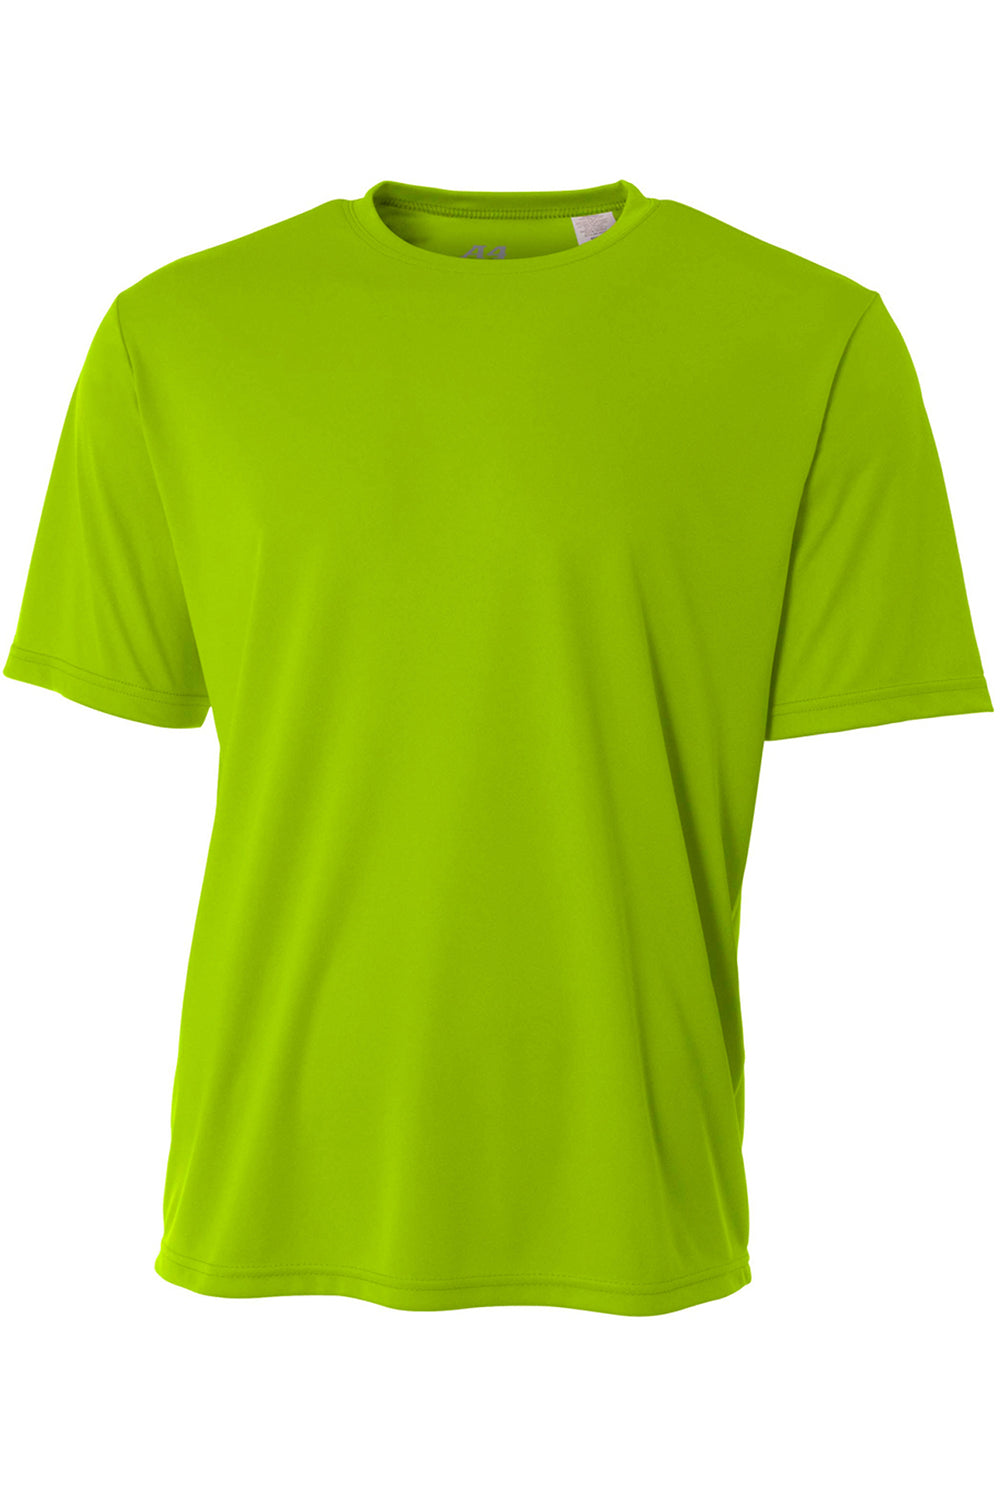 A4 N3142 Mens Performance Moisture Wicking Short Sleeve Crewneck T-Shirt Lime Green Flat Front